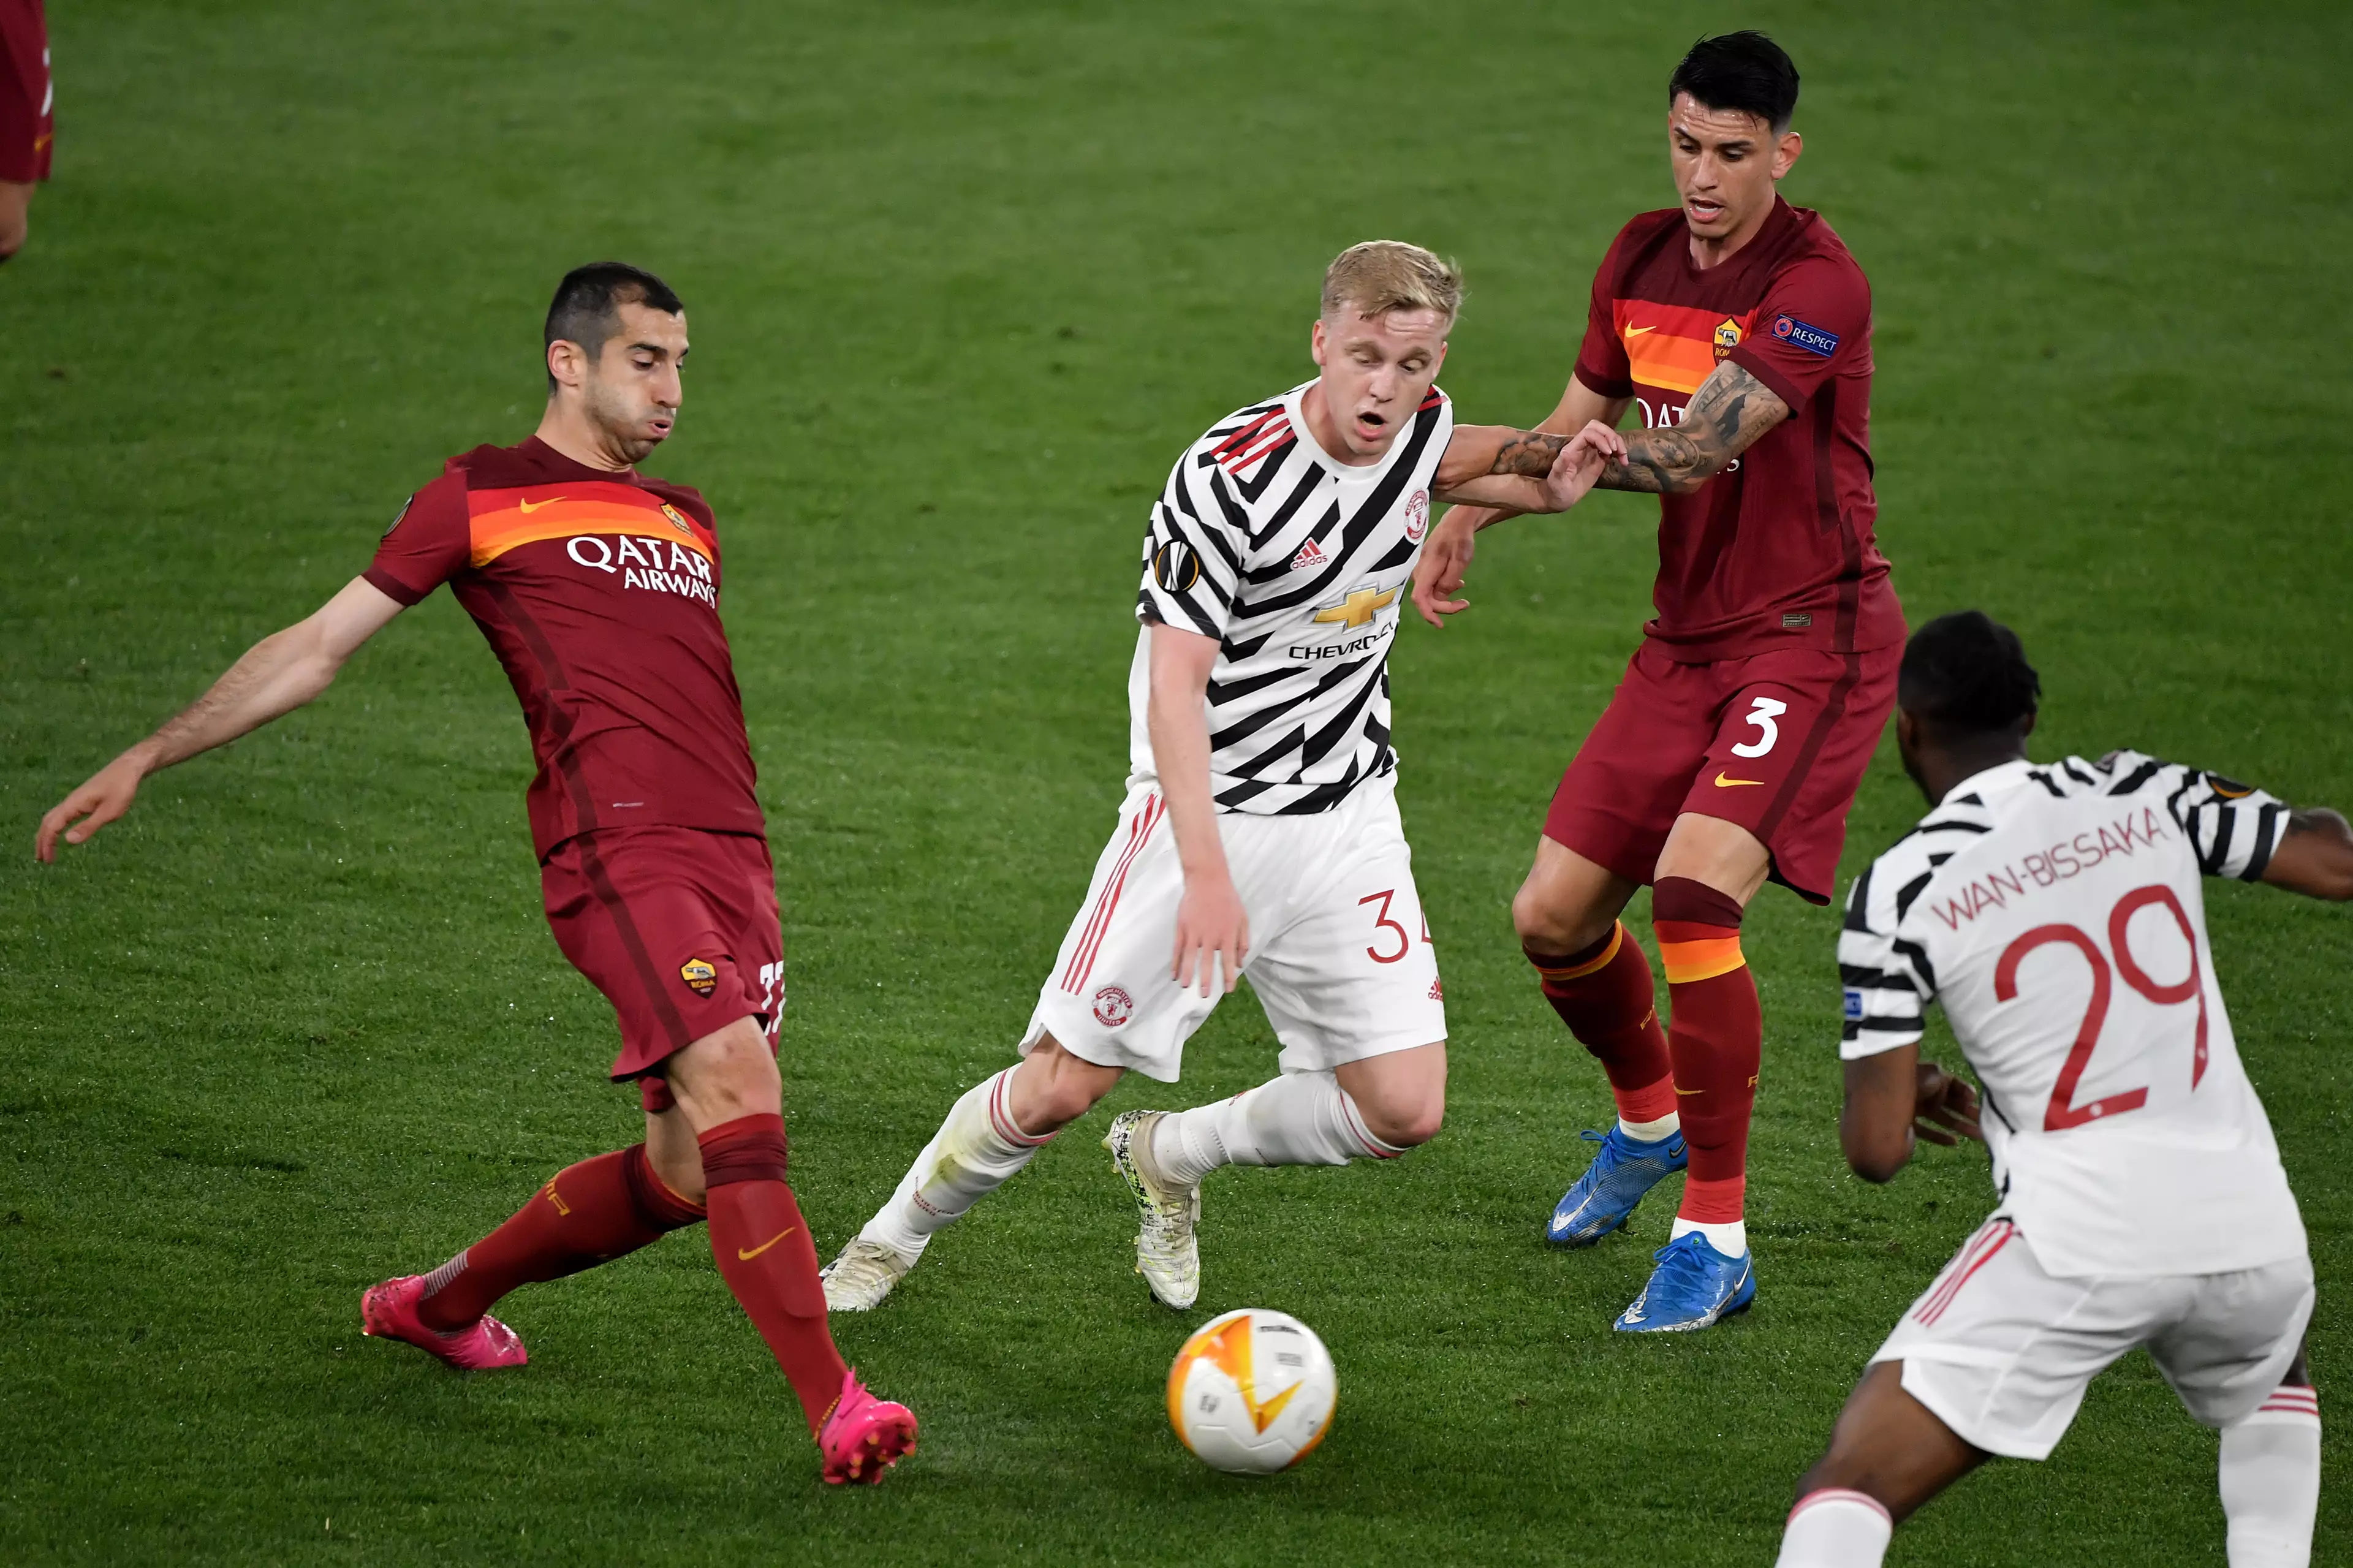 Van de Beek in action during last season's Europa League clash with Roma (Image